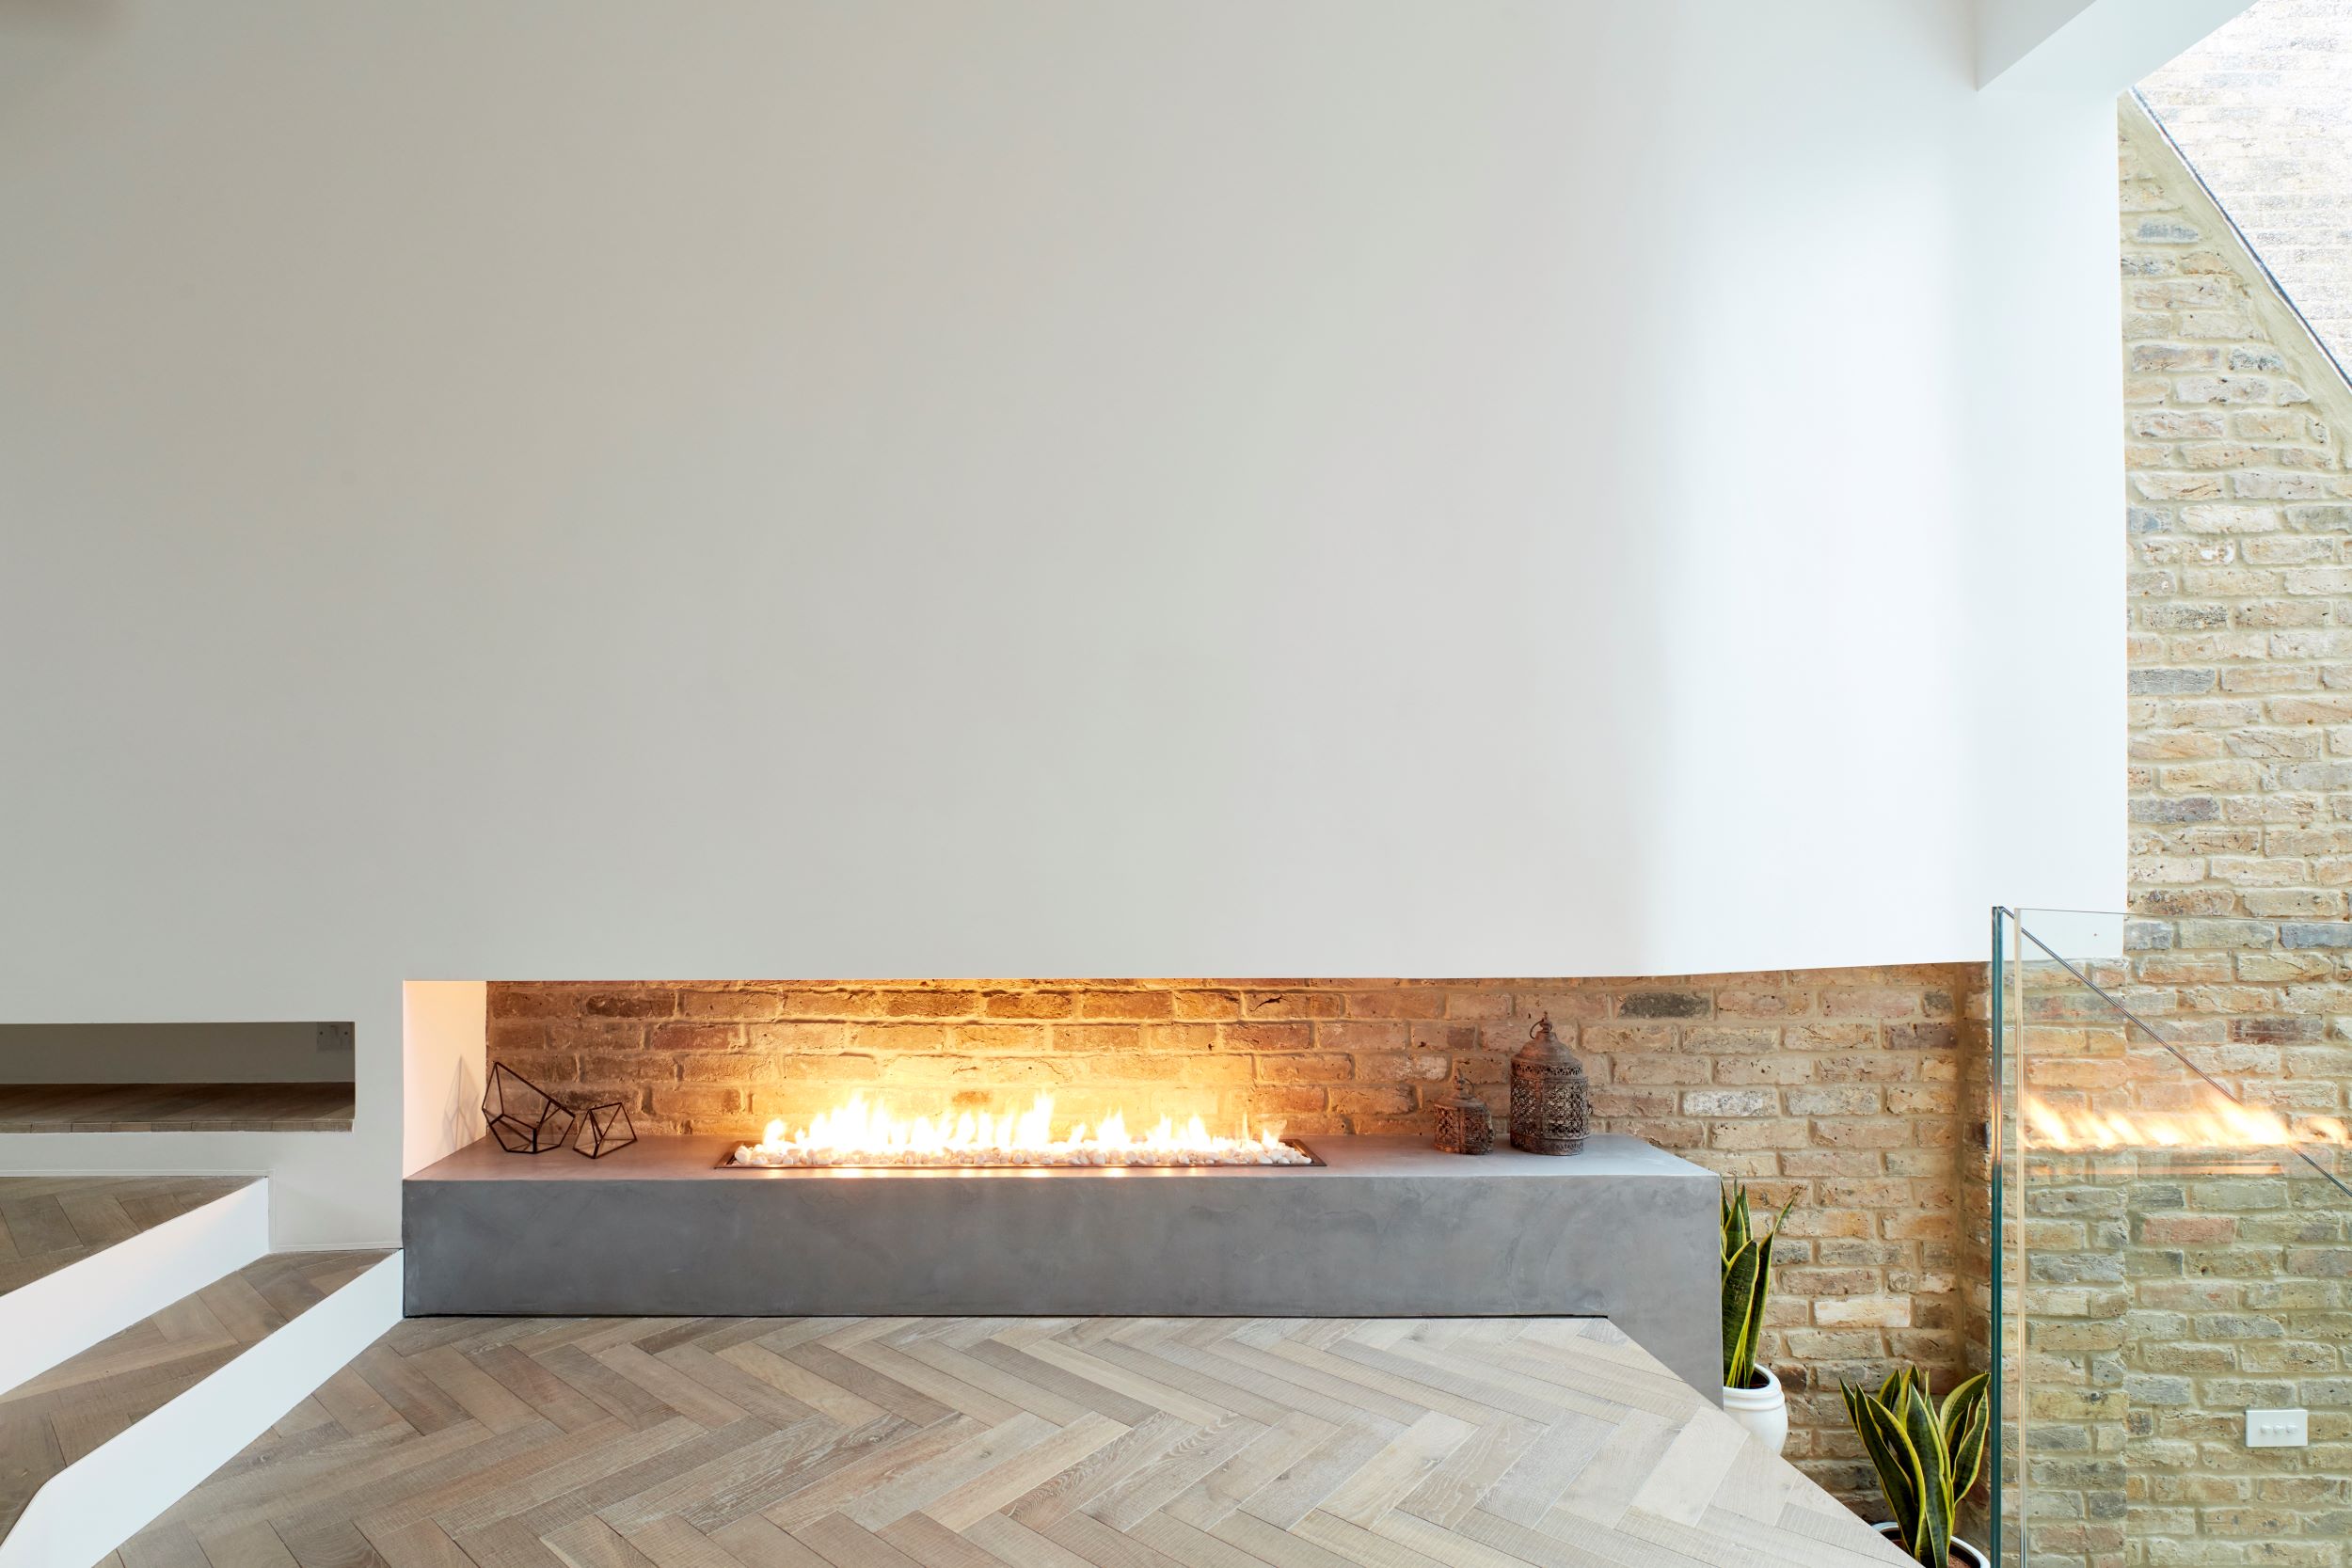 Modern open fire place and herringbone floor.